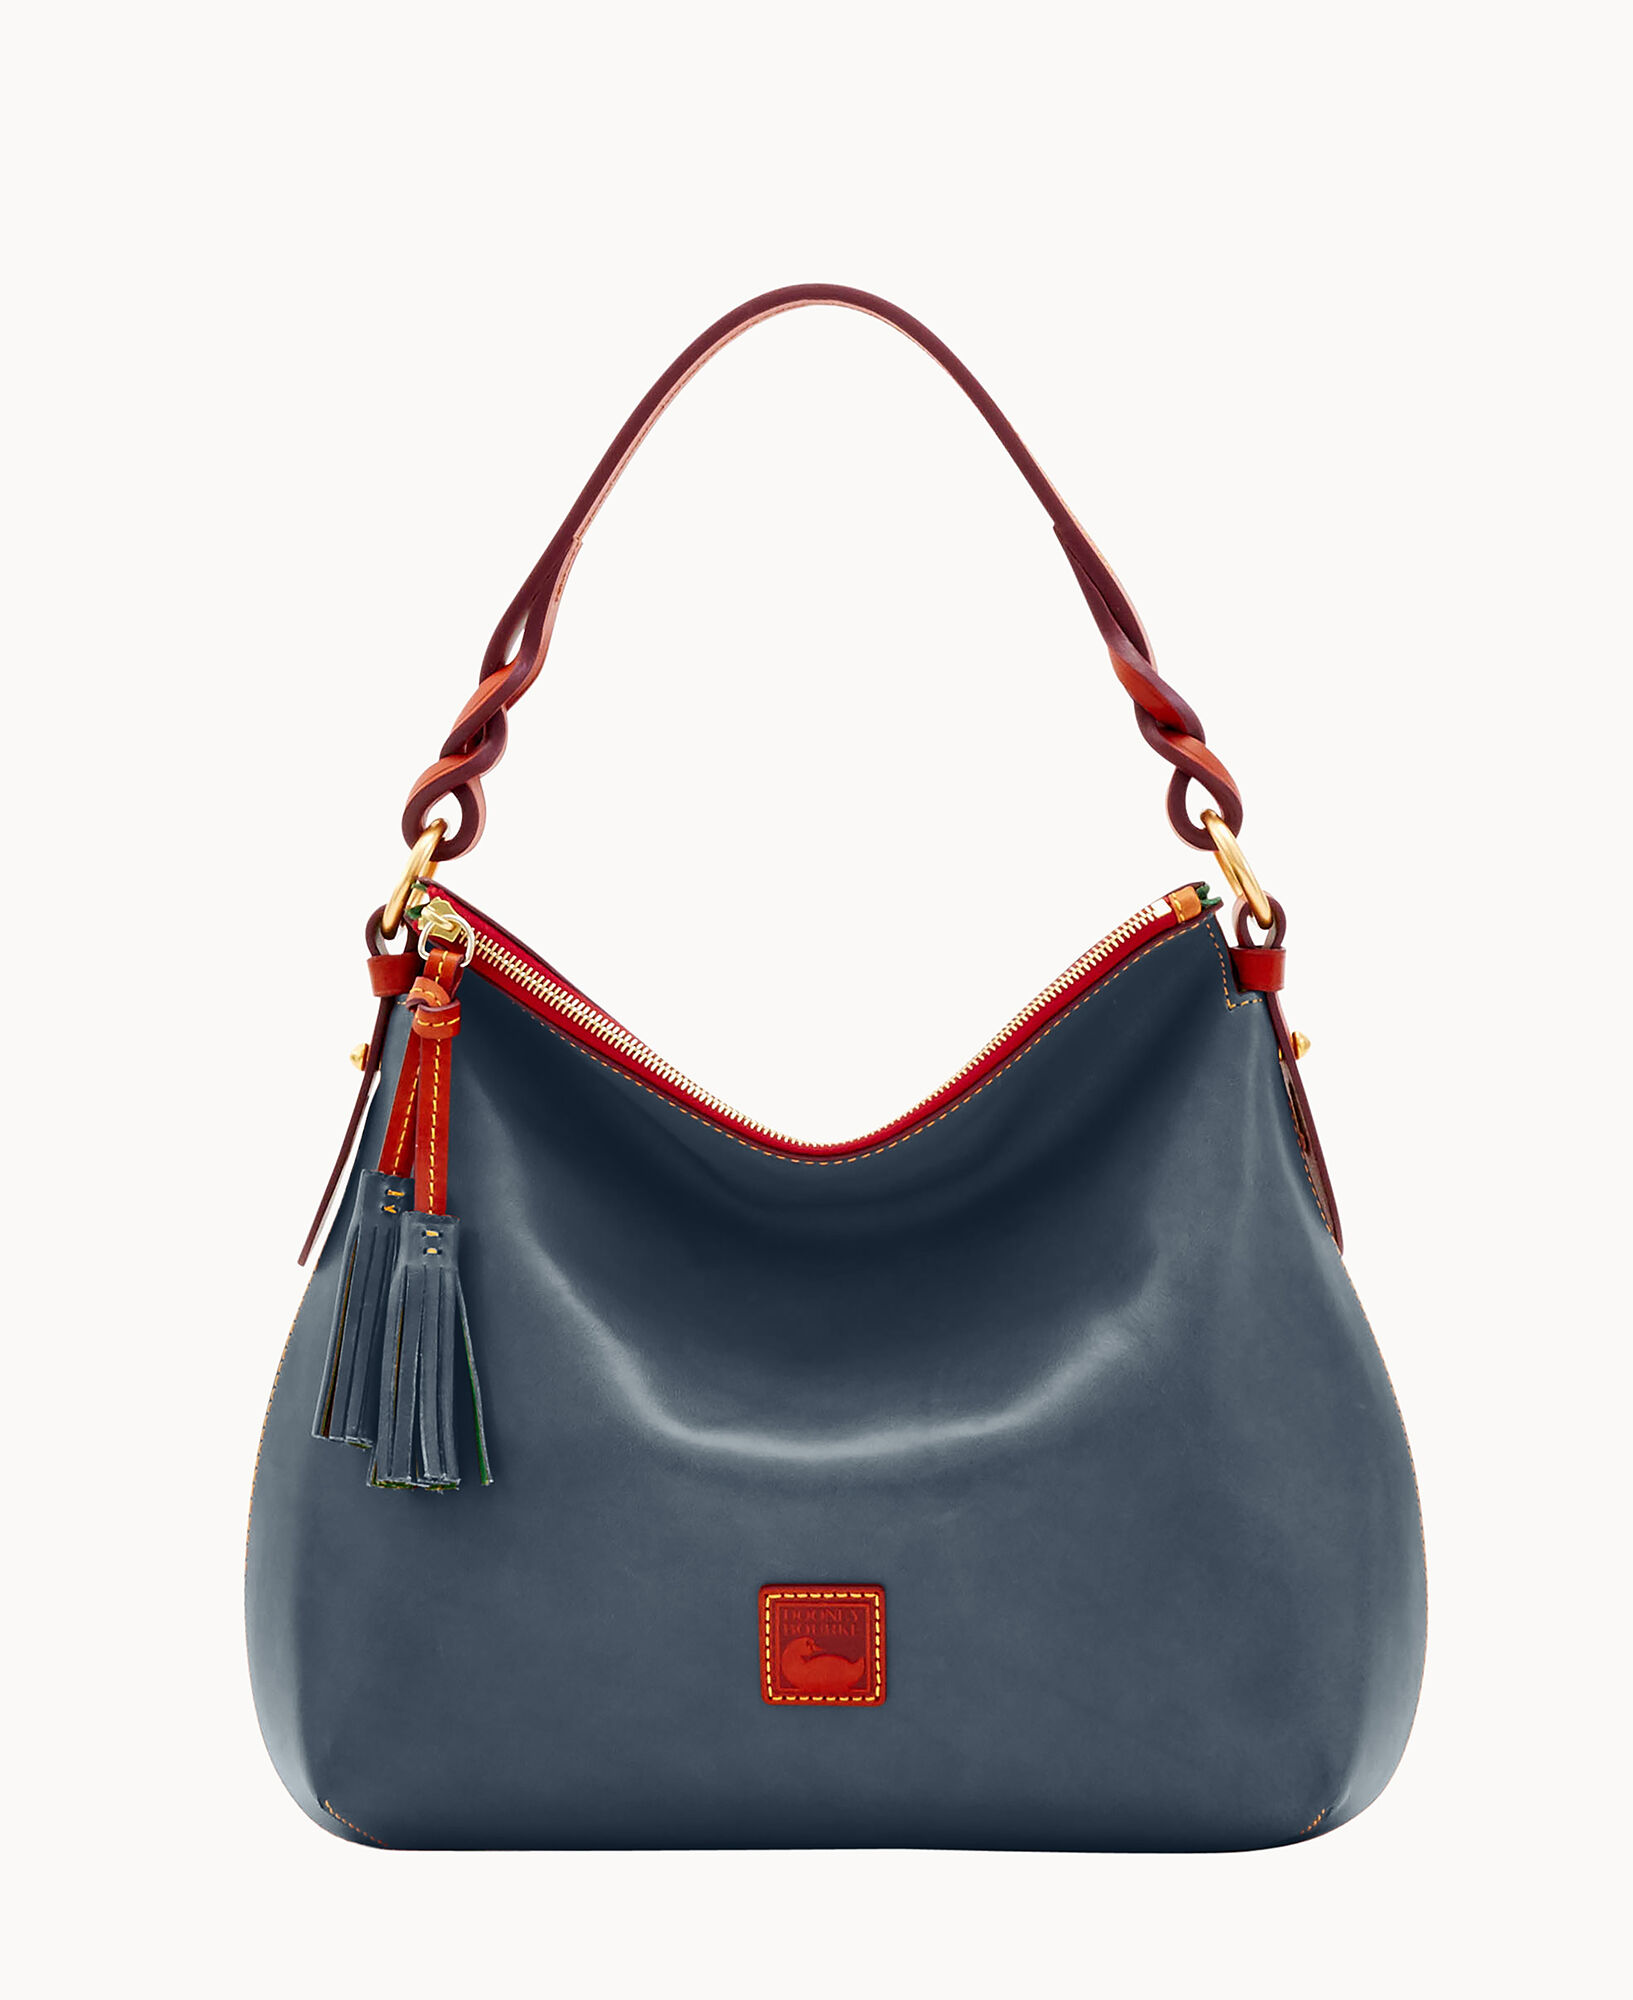 Dooney & Bourke Chain Strap Handbags